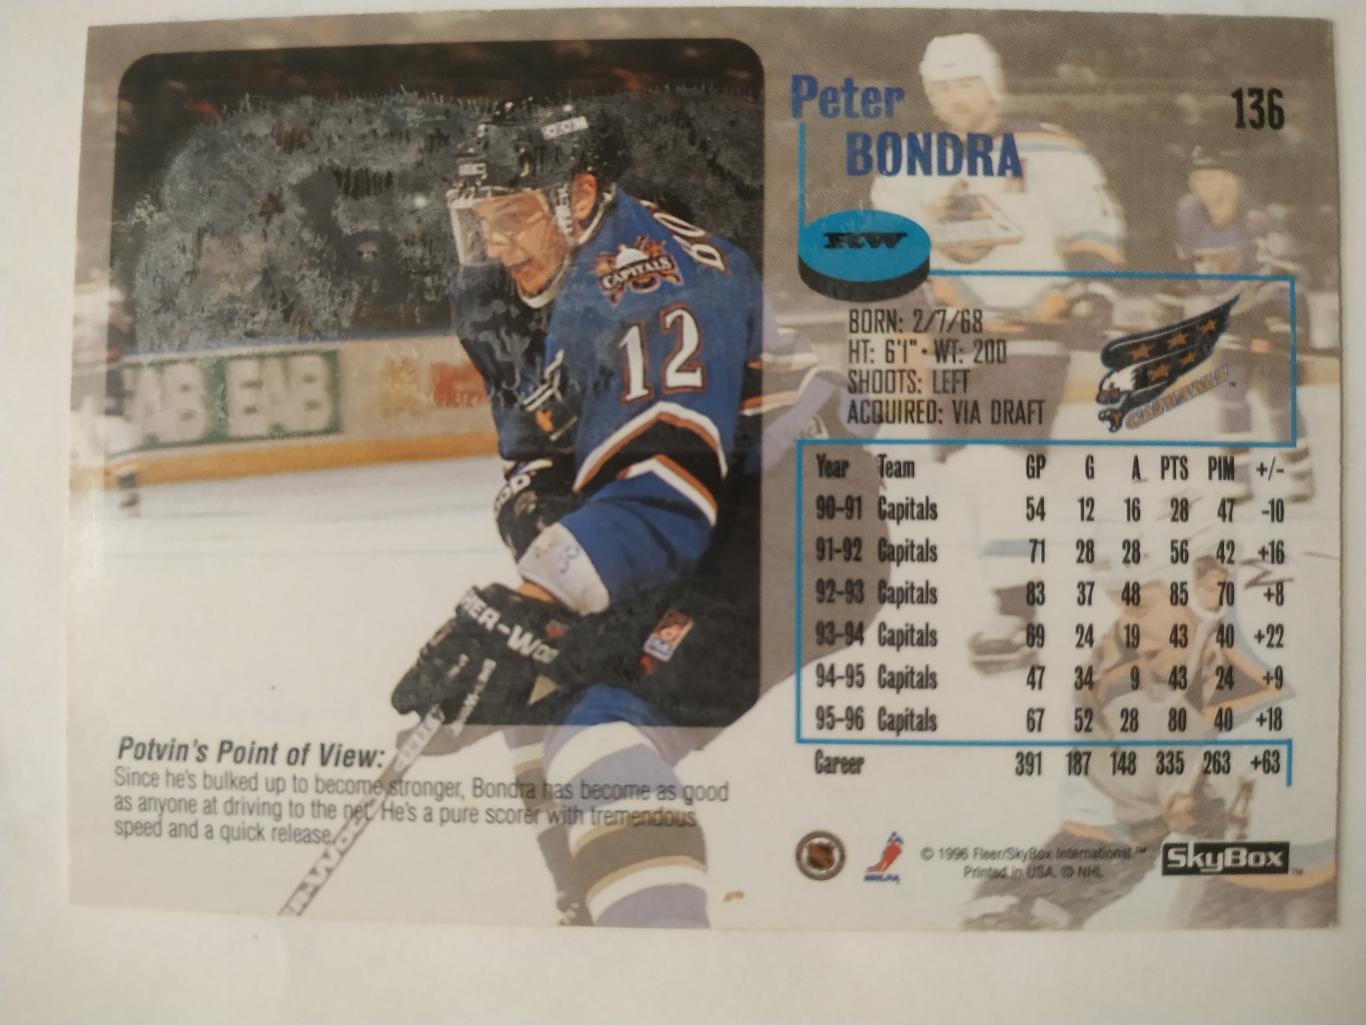 ХОККЕЙ КАРТОЧКА НХЛ IMPACT SKYBOX 1996-97 PETER BONDRA WASINGTON CAPITALS #136 1